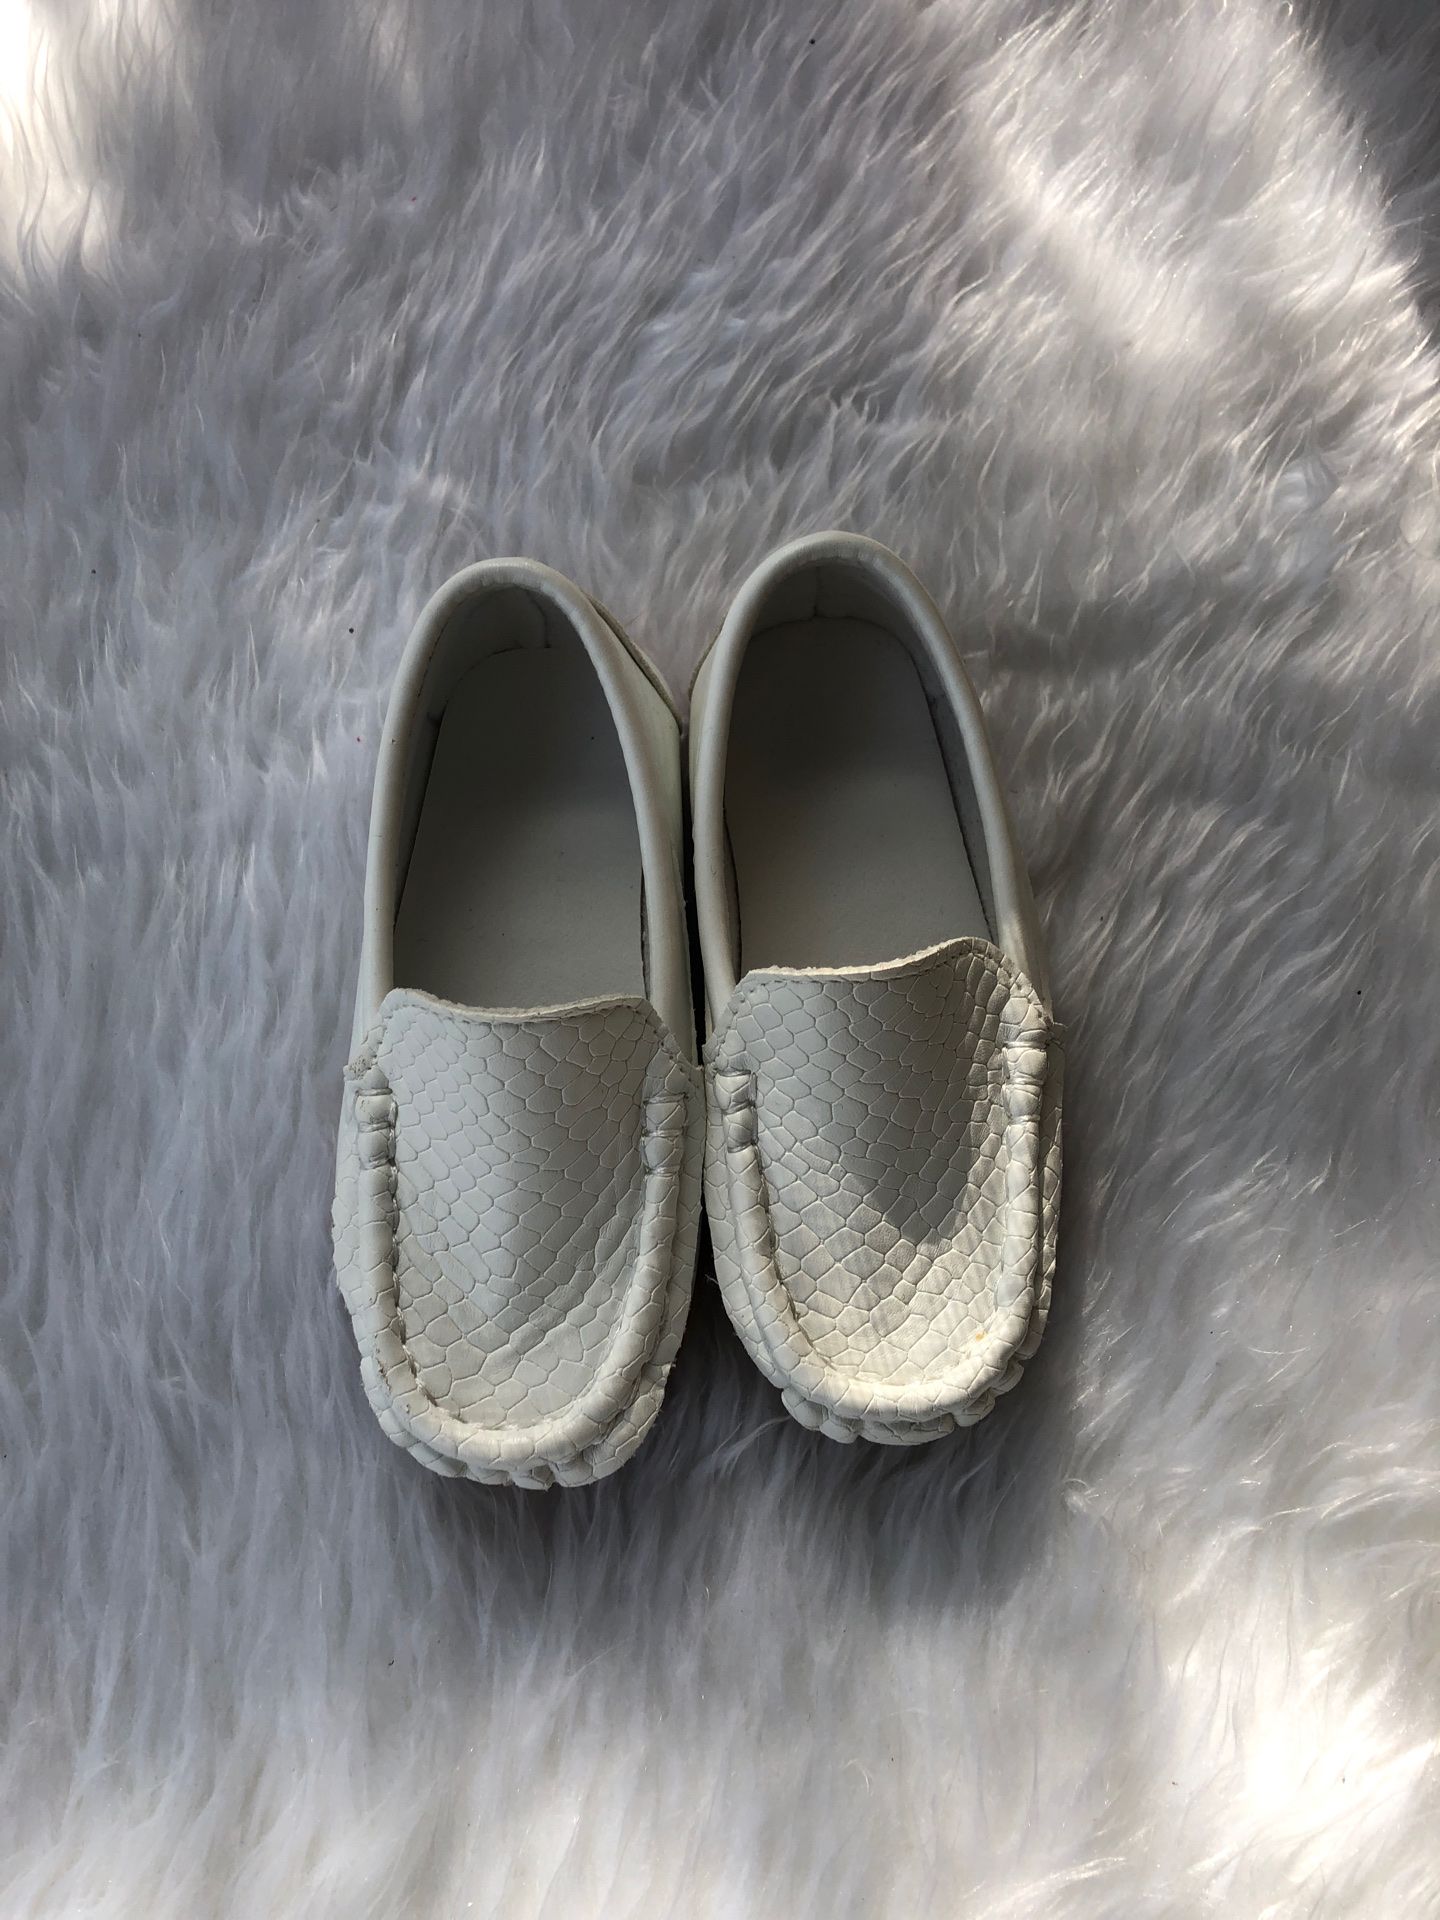 White dress shoes size 7